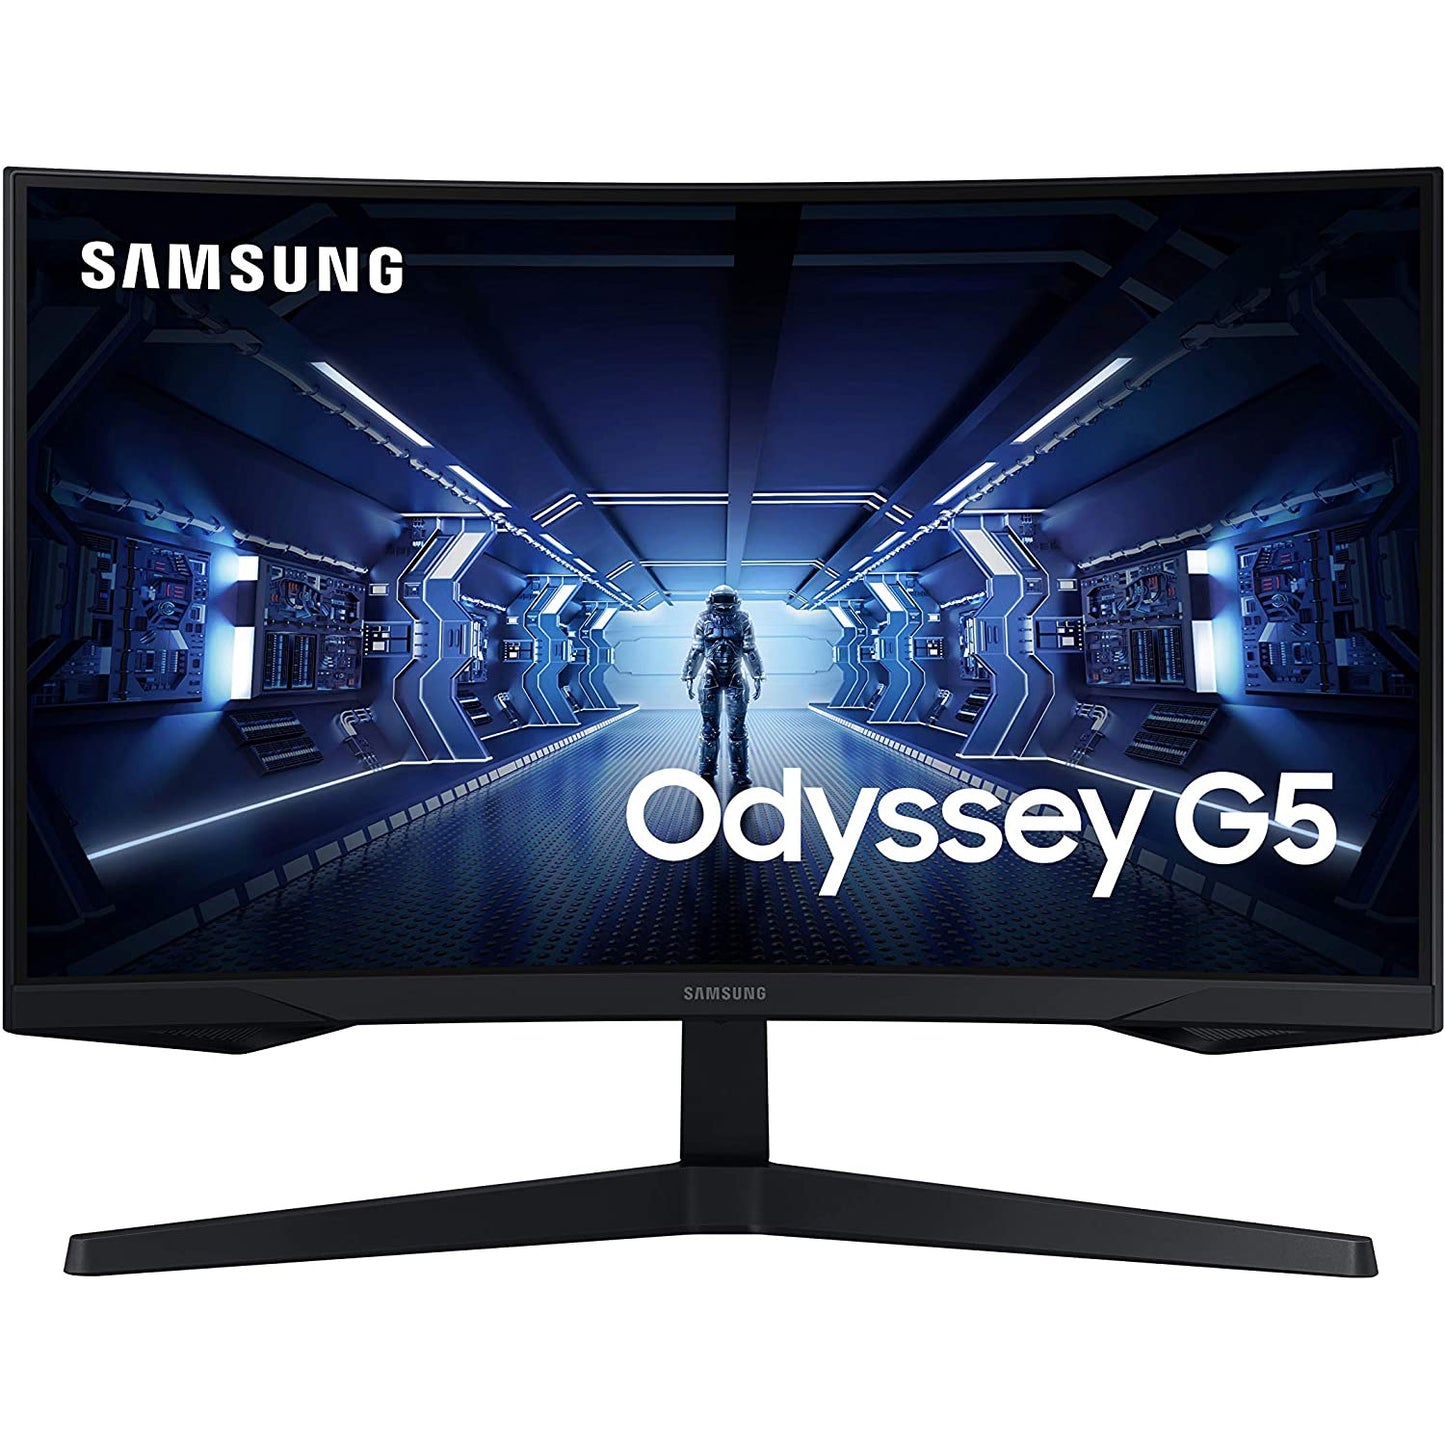 SAMSUNG 27 Odyssey G5 2K HDR 144hz 1000R Curved Gaming Monitor